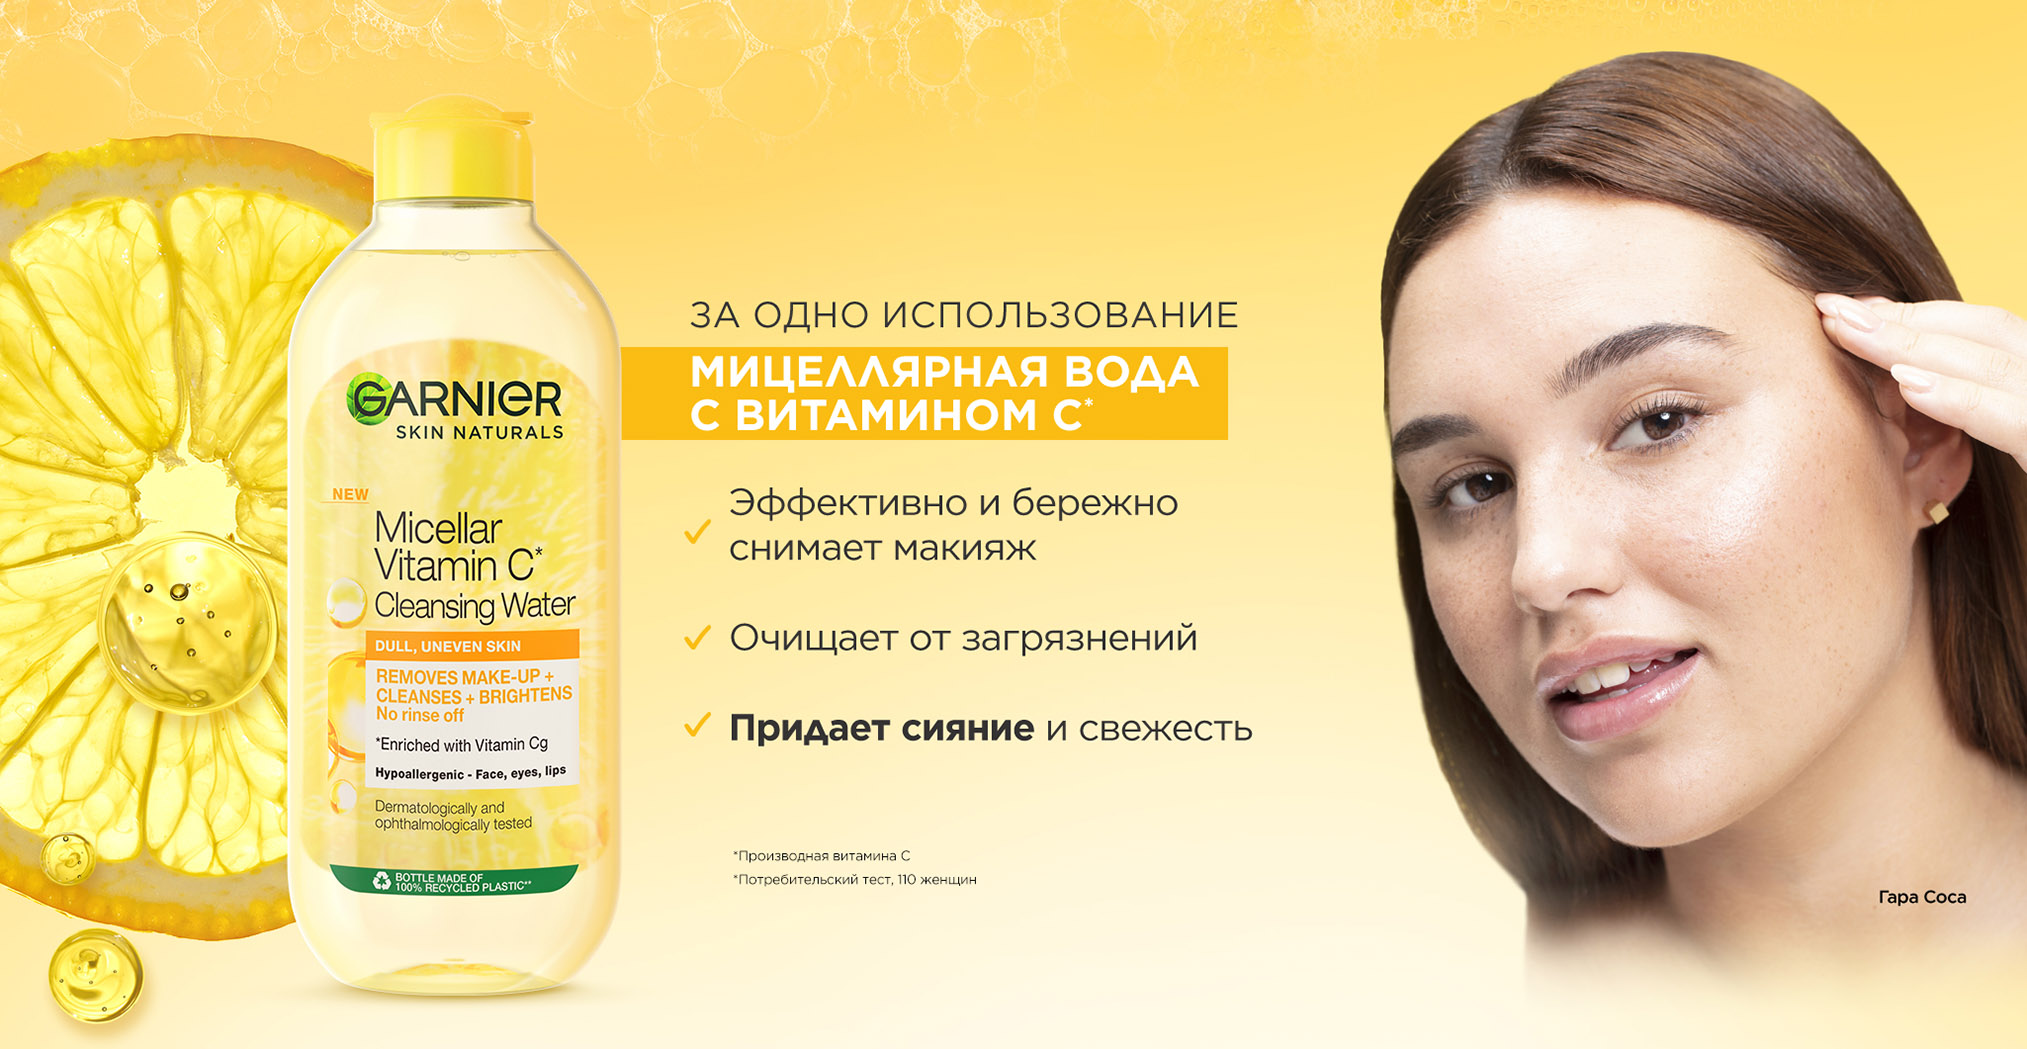 Garnier Skin Naturals Vitamin C Micellar Cleansing Water